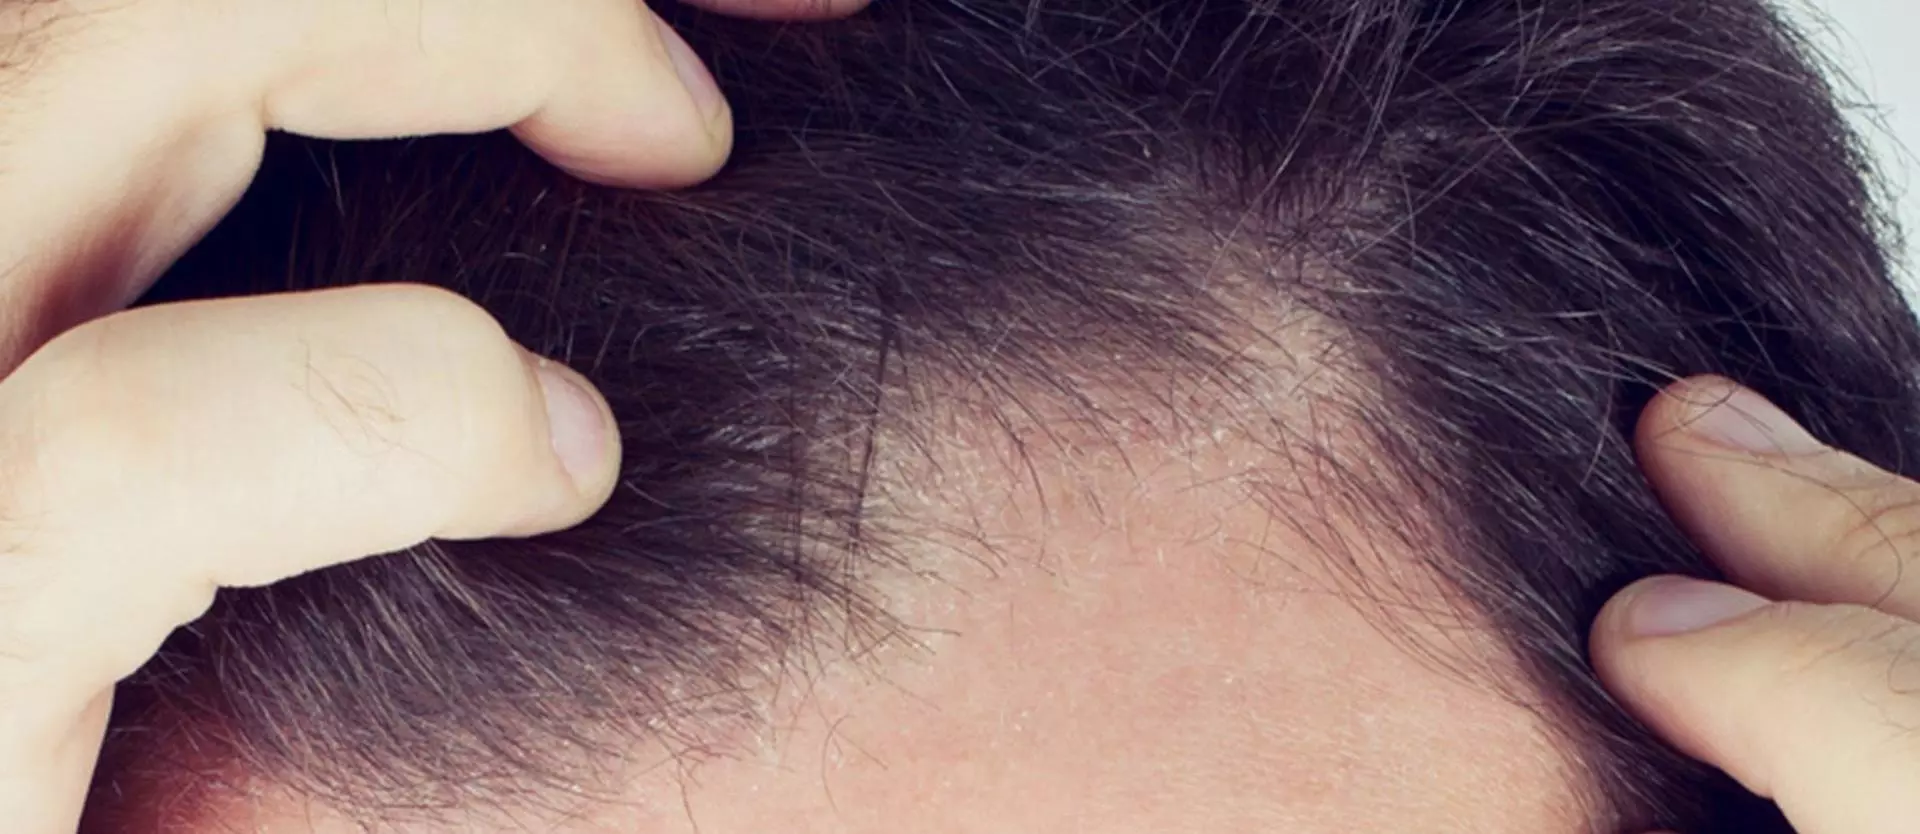 Man with symptoms of Frontal Fibrosing Alopecia